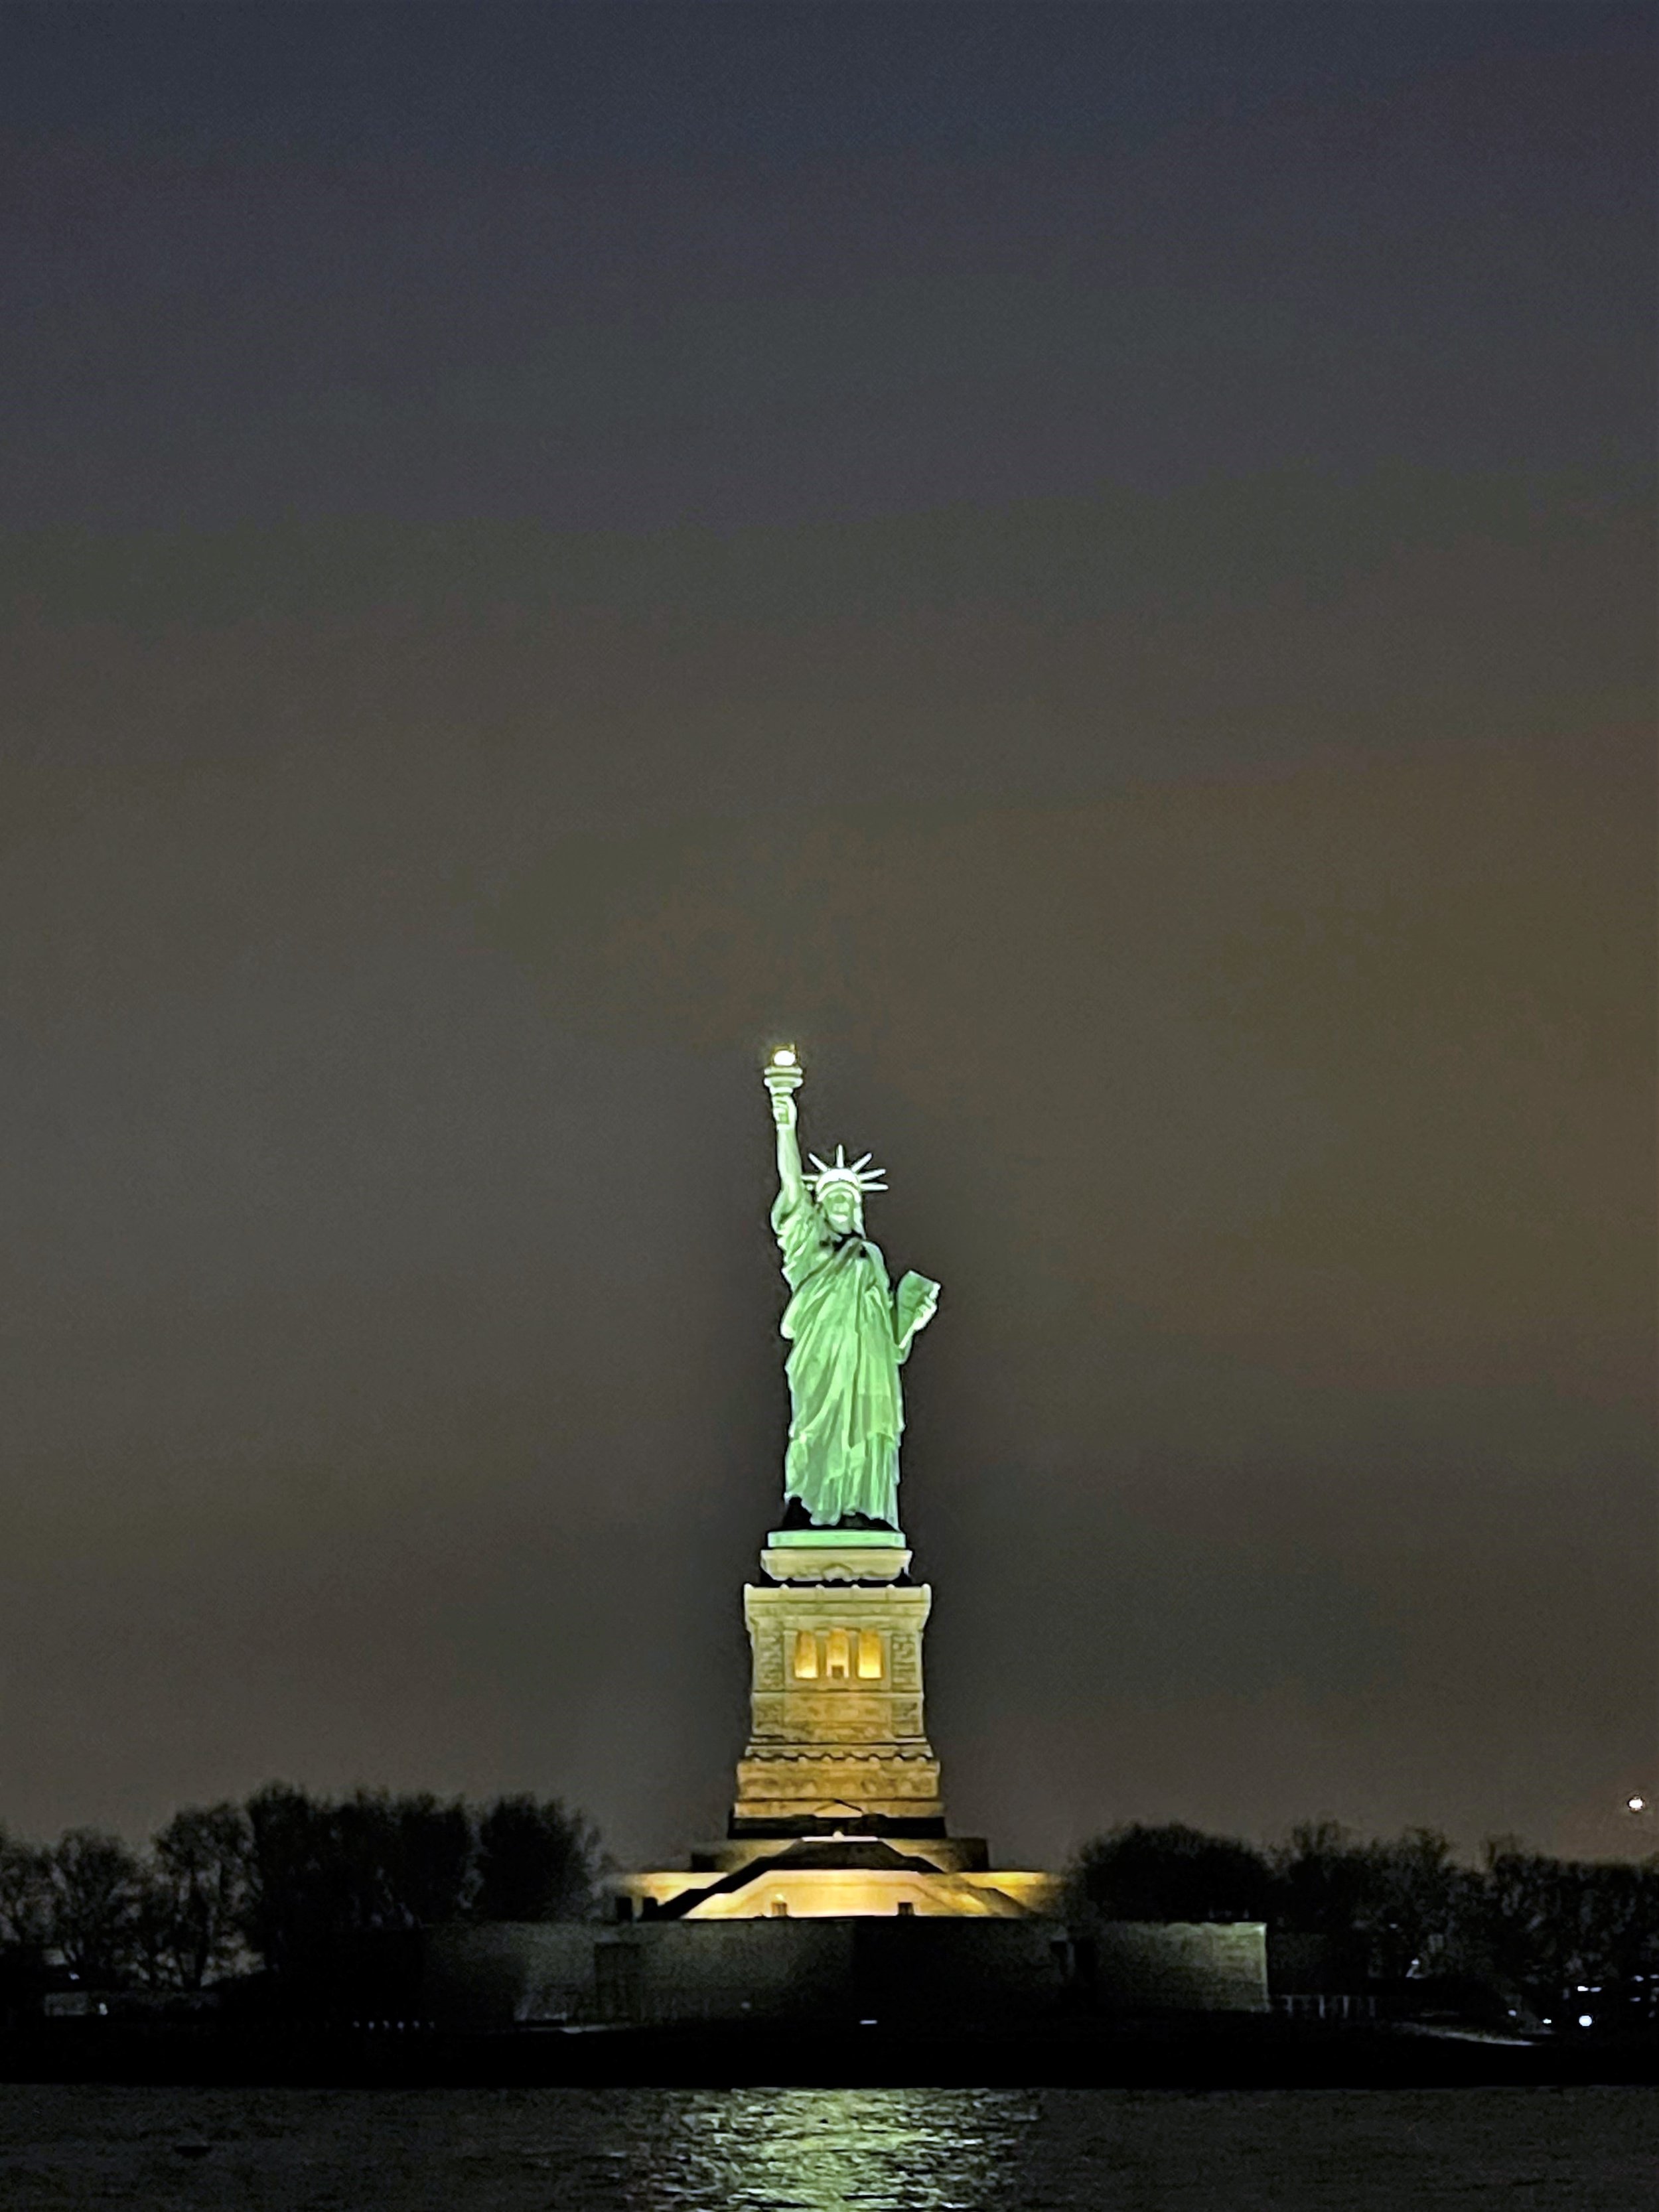 statue of liberty.jpg